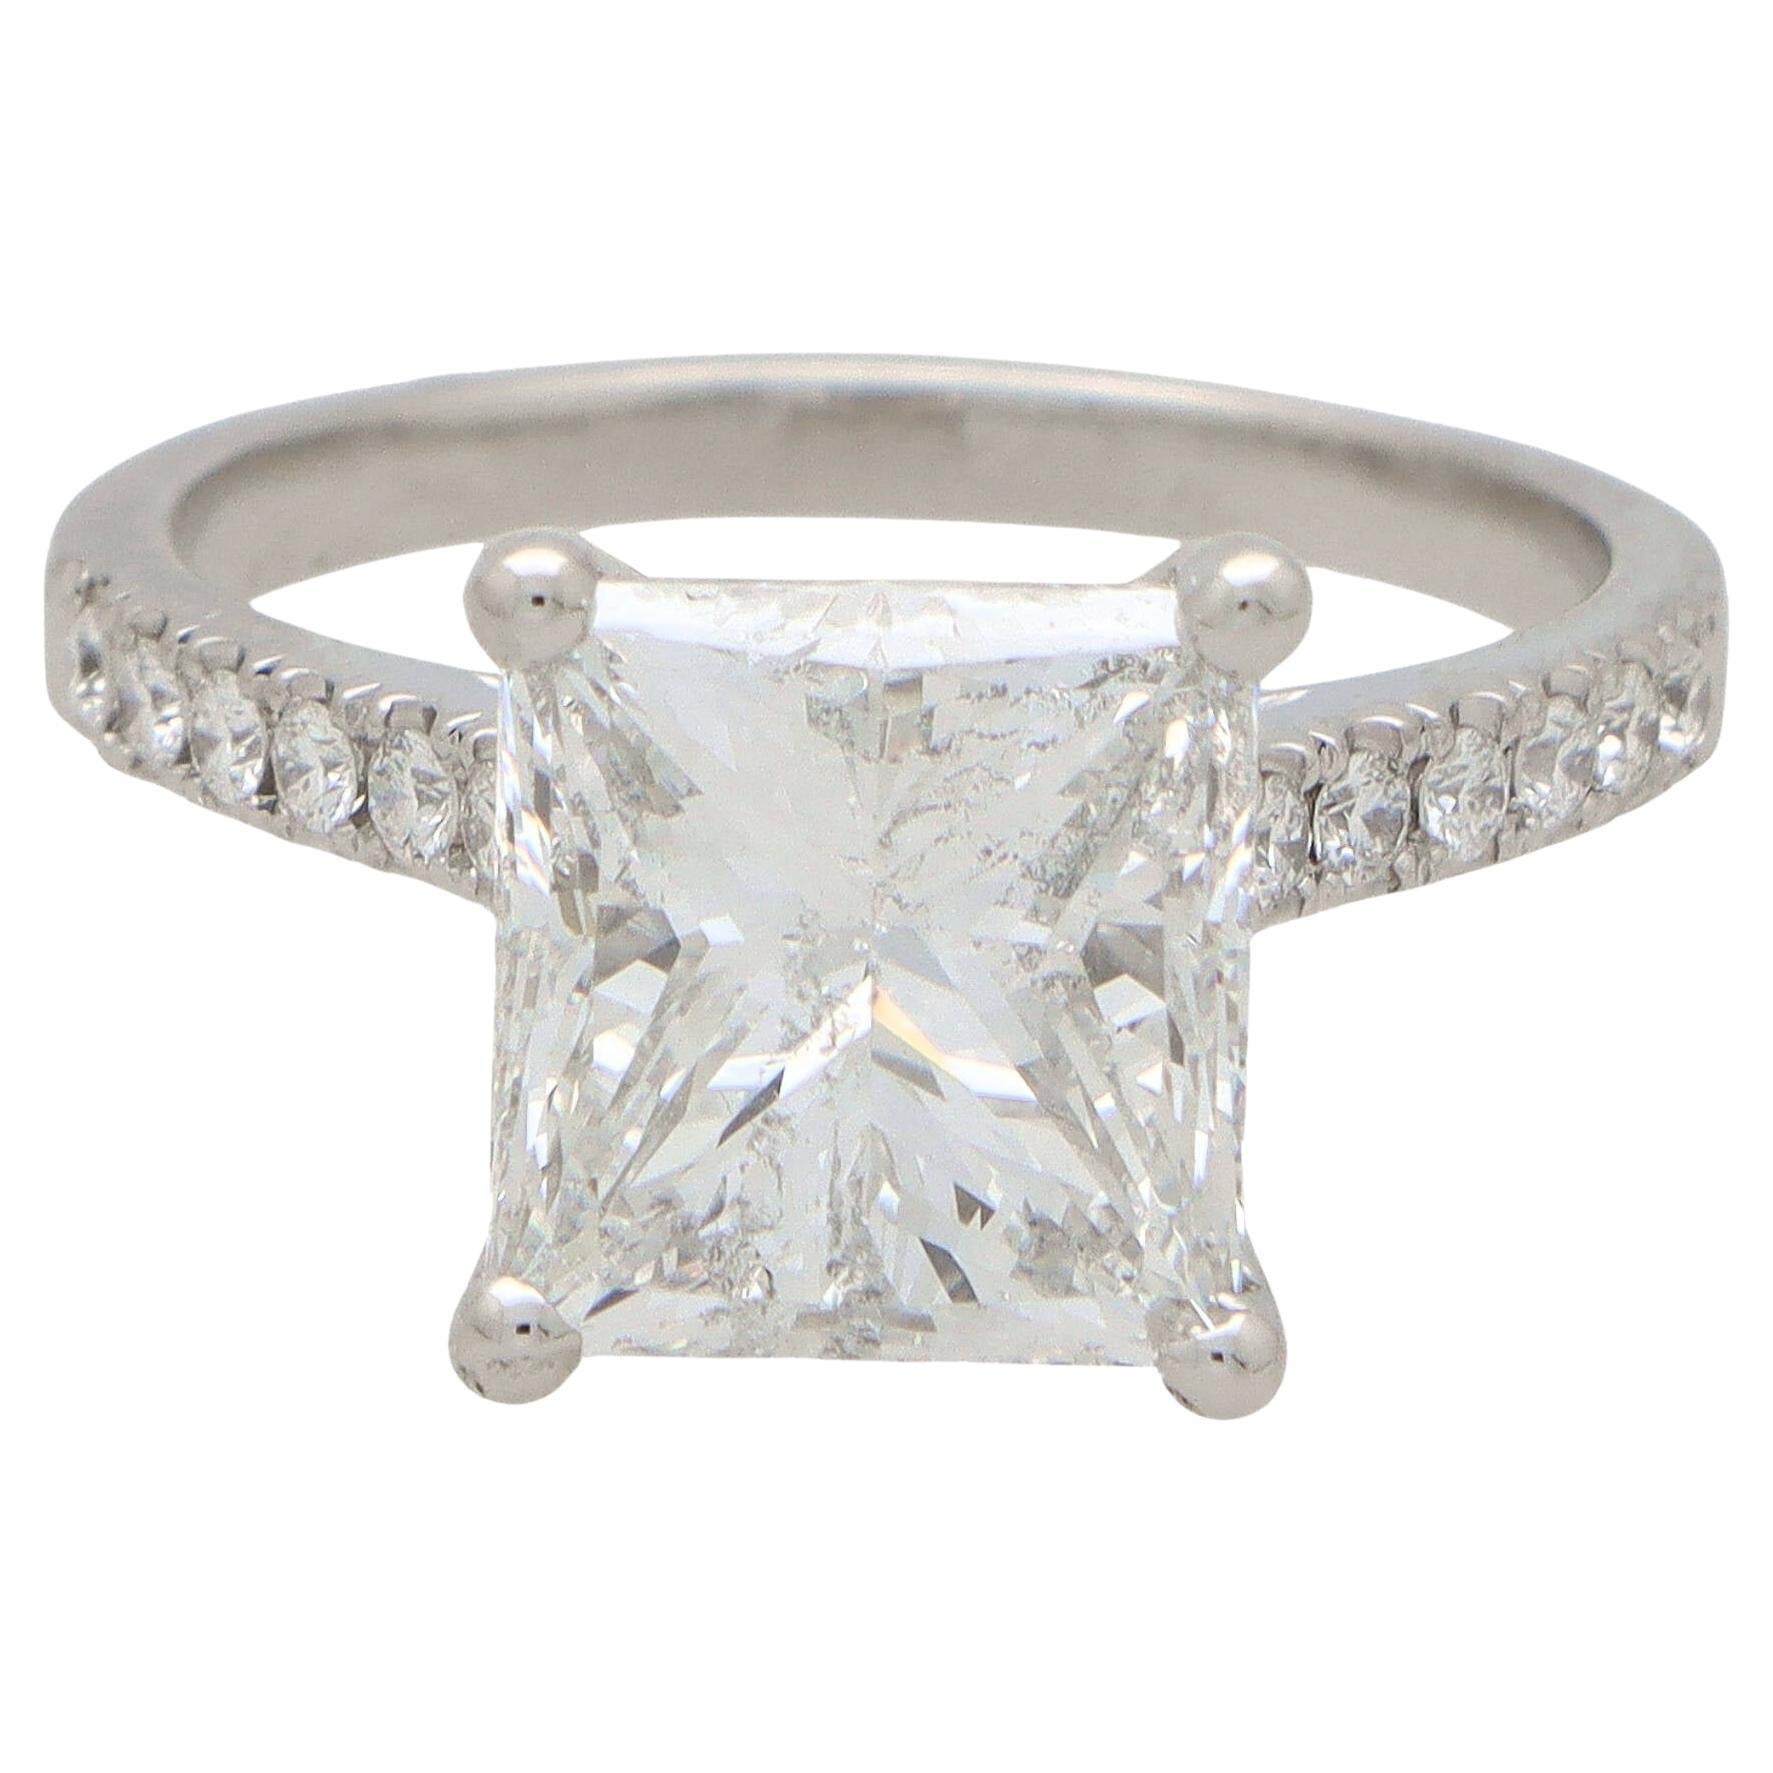 Certified 5.02ct, F Color, Princess Cut Diamond Ring in Platinum